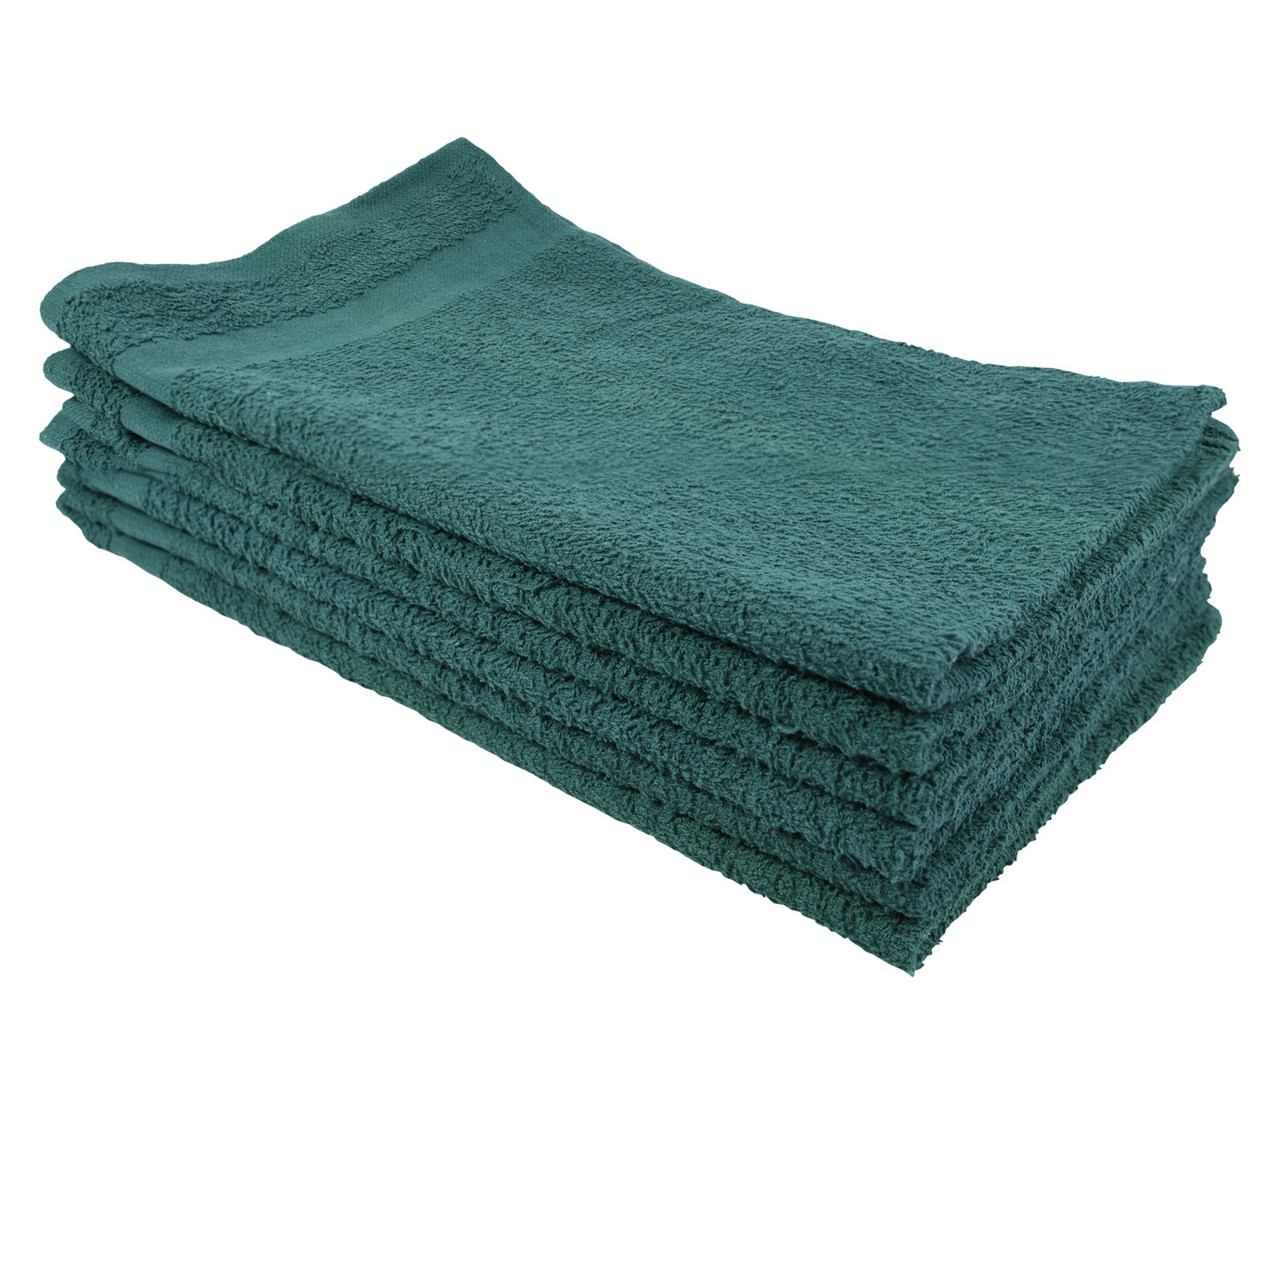 https://cdn11.bigcommerce.com/s-a5uwe4c7wz/images/stencil/1280x1280/products/717/1617/Cotton-Dark-Green-Towels-1627__85264.1586441106.jpg?c=1